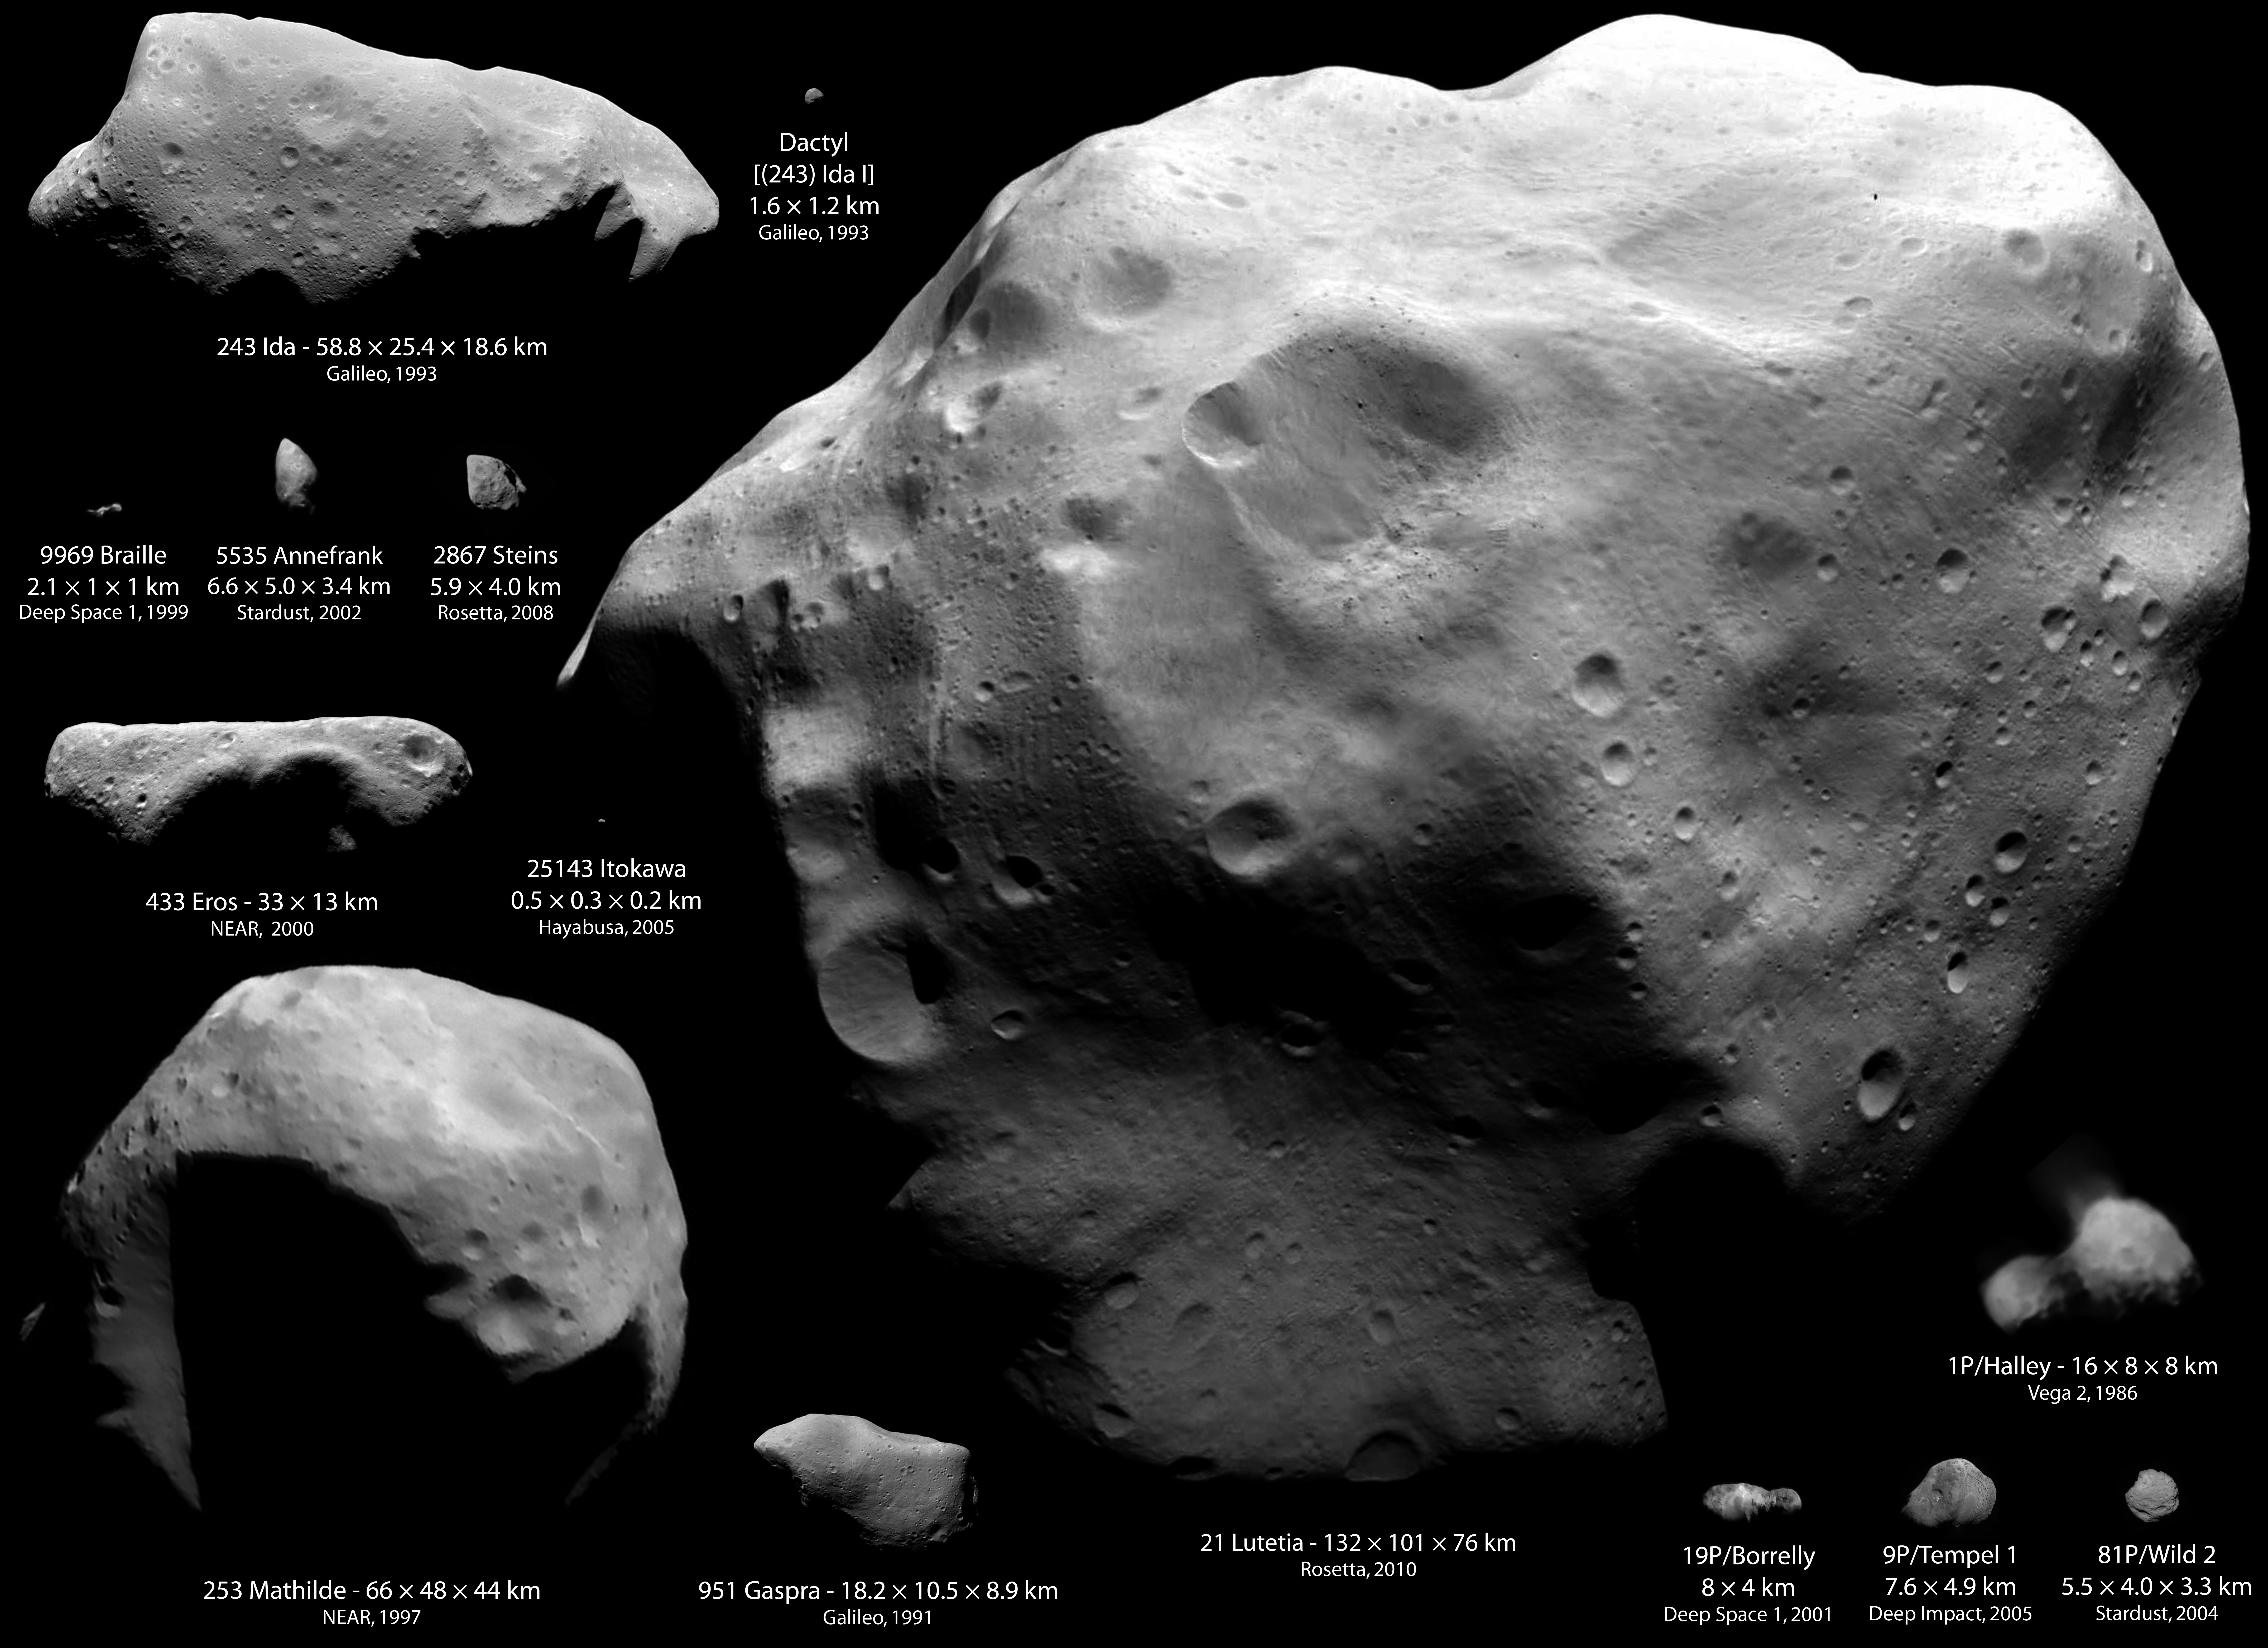 http://apod.nasa.gov/apod/image/1007/asteroidscomets_lakdawalla_big.jpg